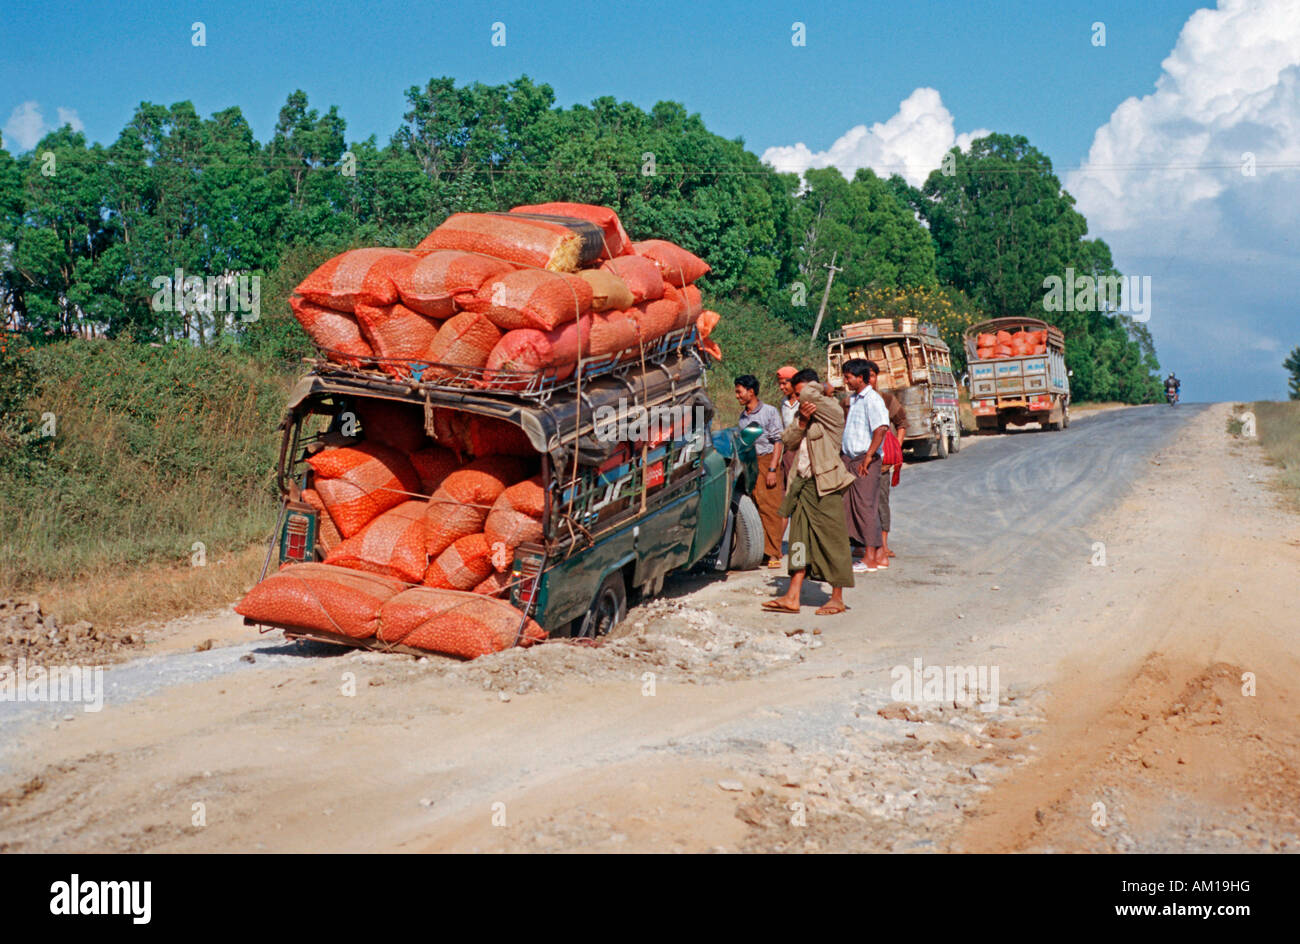 Cramped pickup with broken axle, Burma, Asia Stock Photo